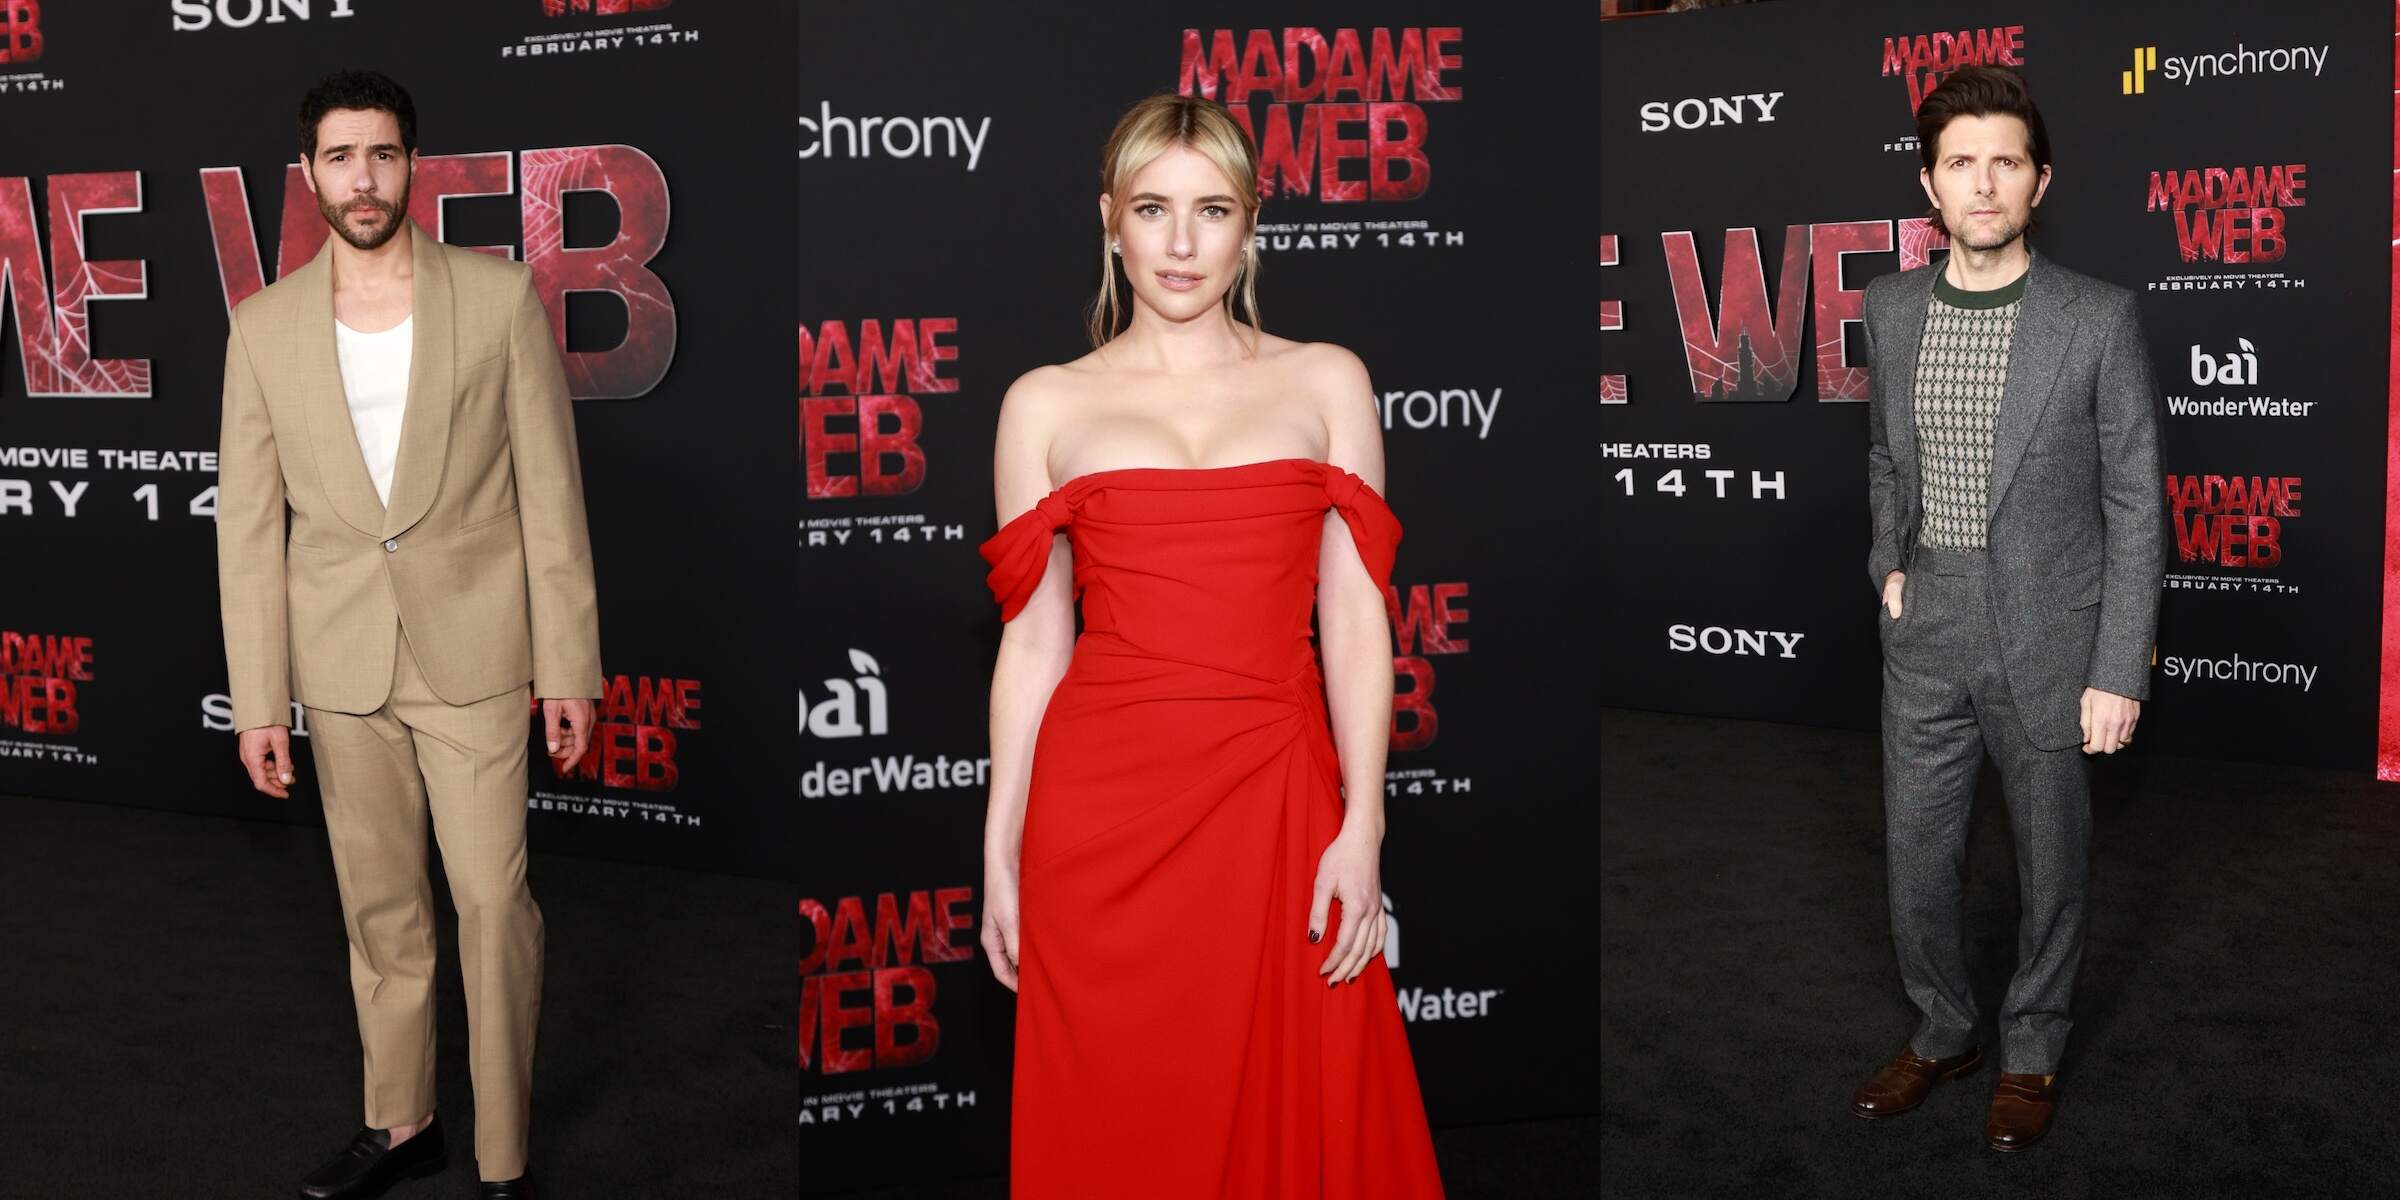 Madame Web stars Tahar Rahim, Emma Roberts, and Adam Scott pose on the red carpet in formalwear